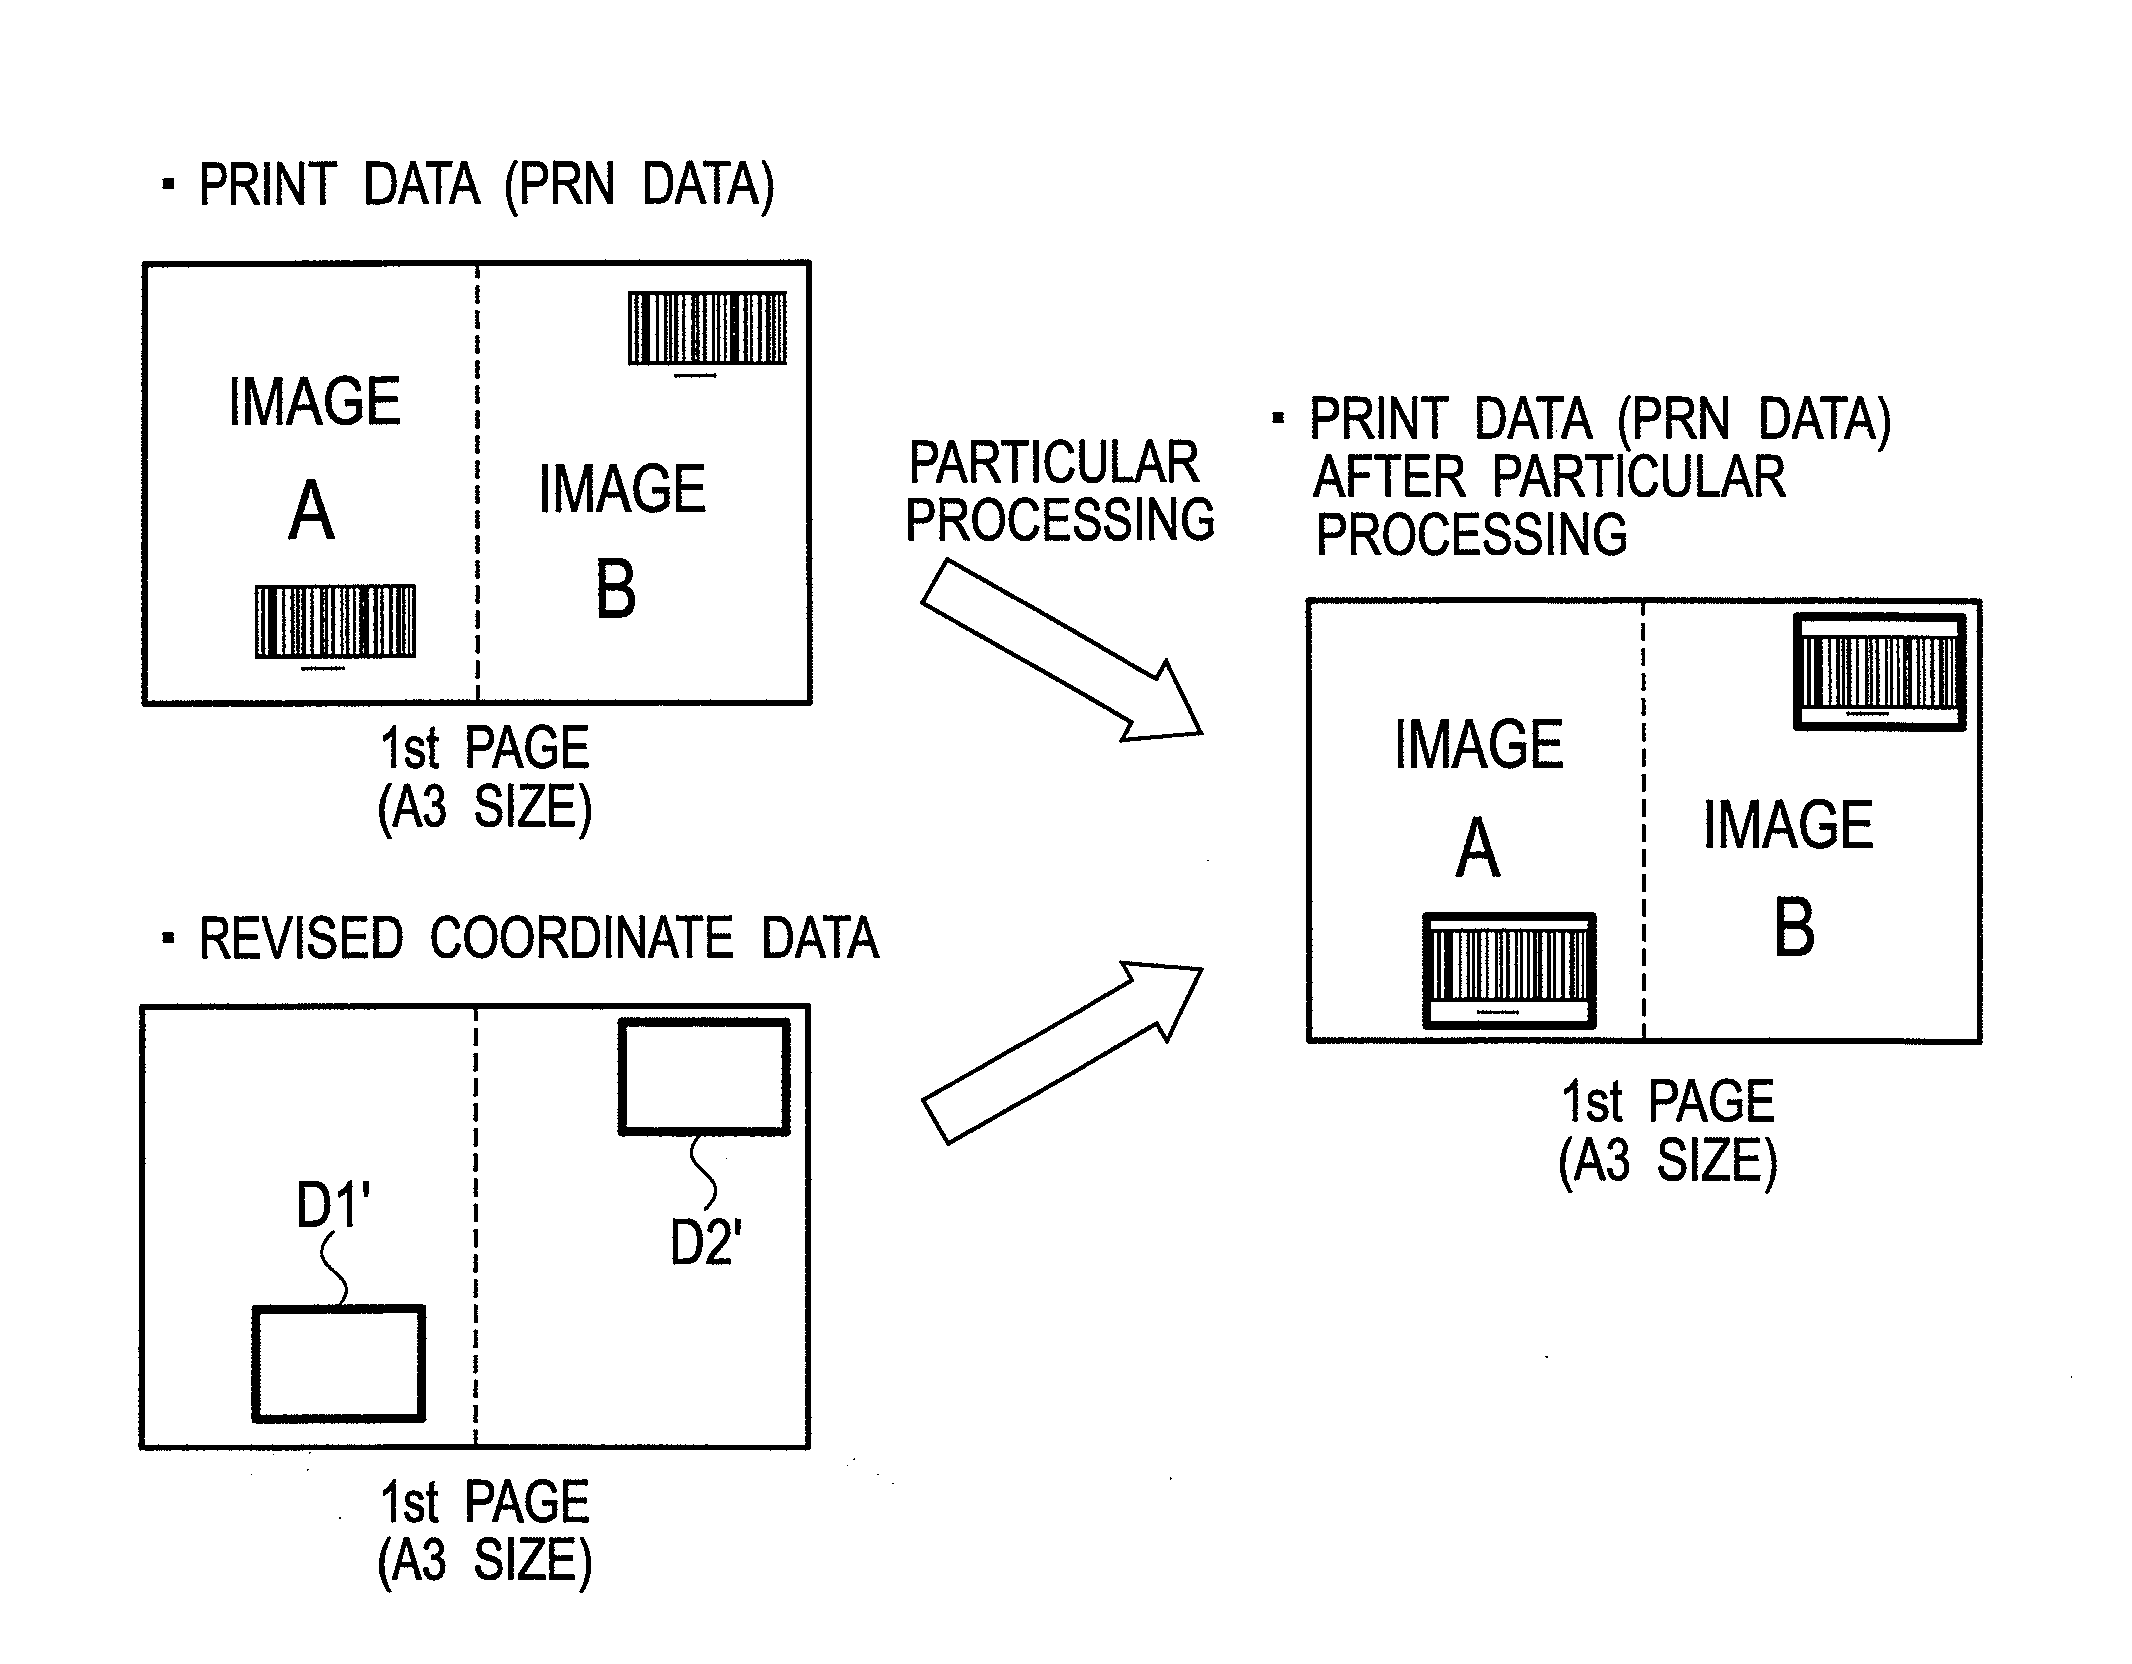 Printer control apparatus